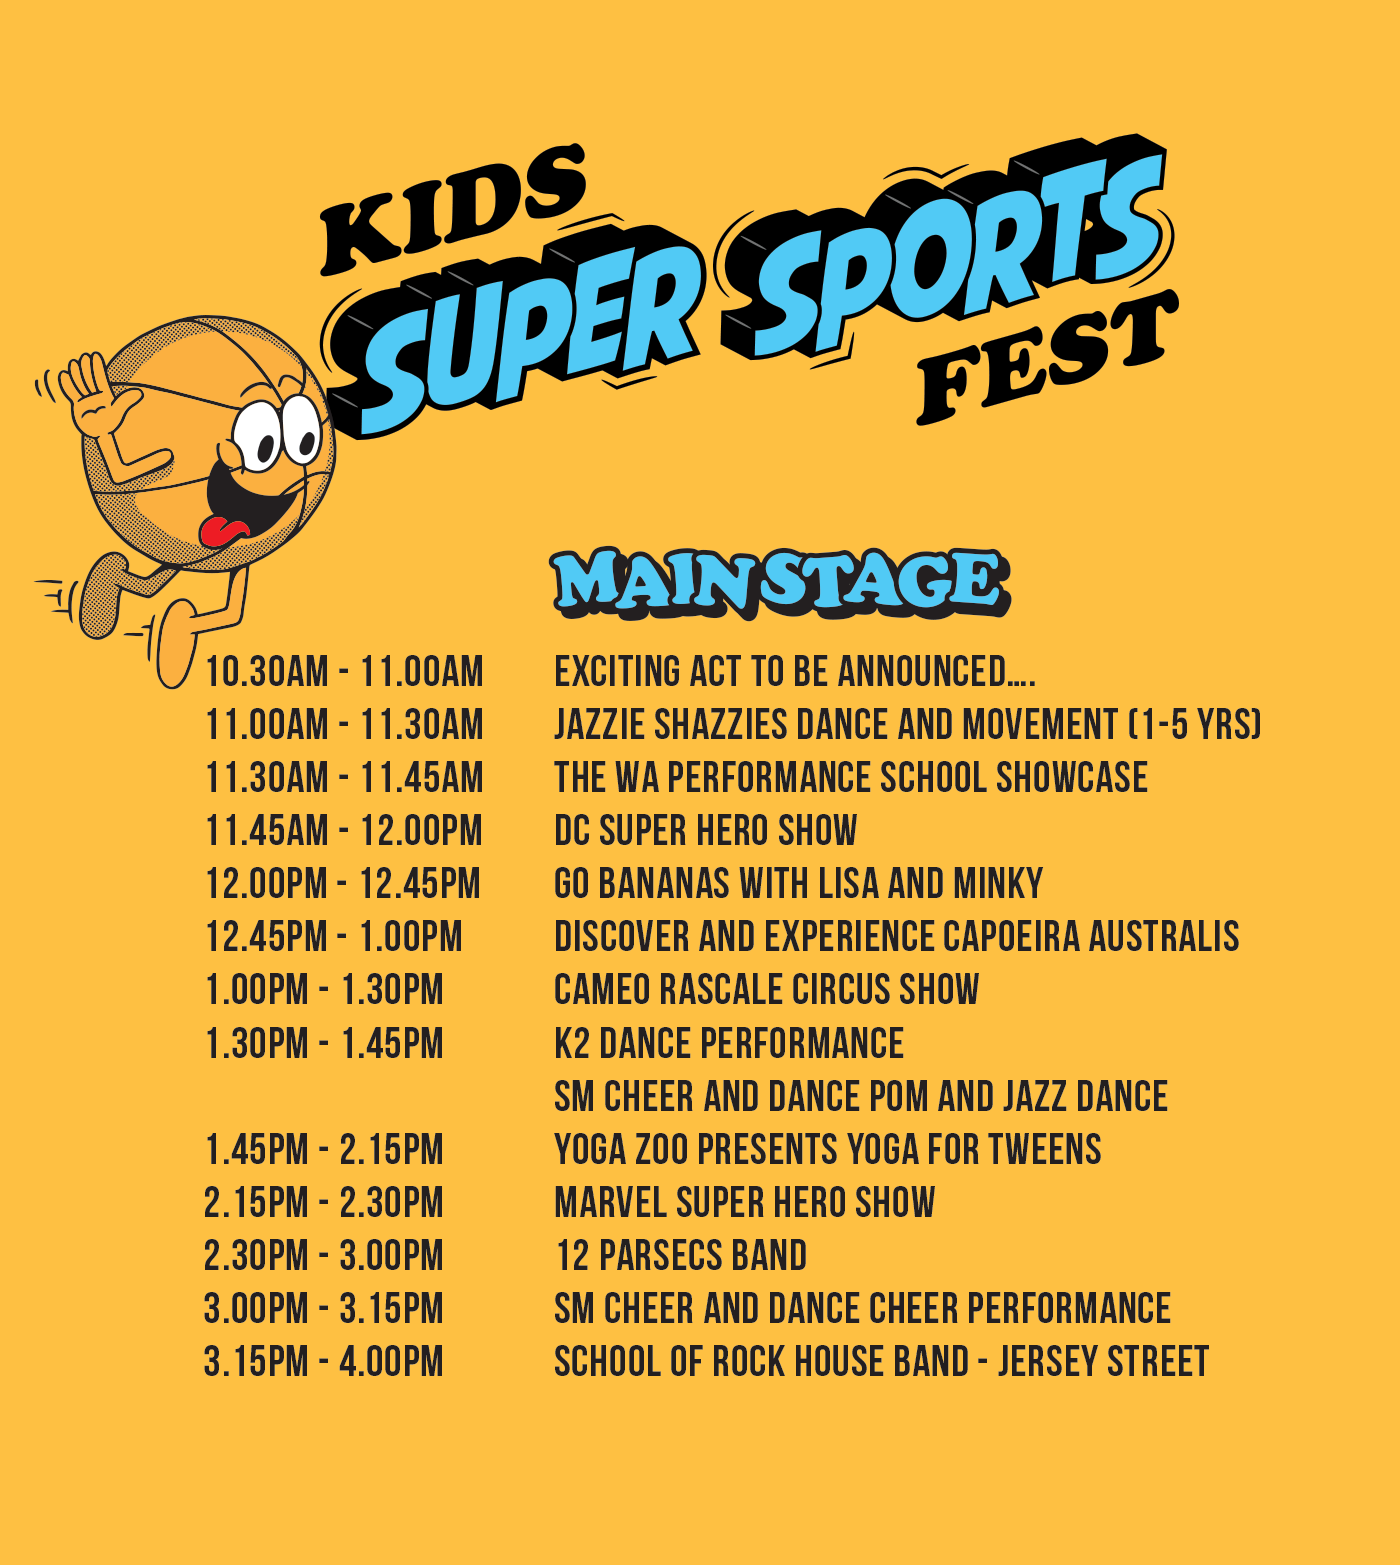 KidsSuperSportsFest_Timetable_MainStage_1400px